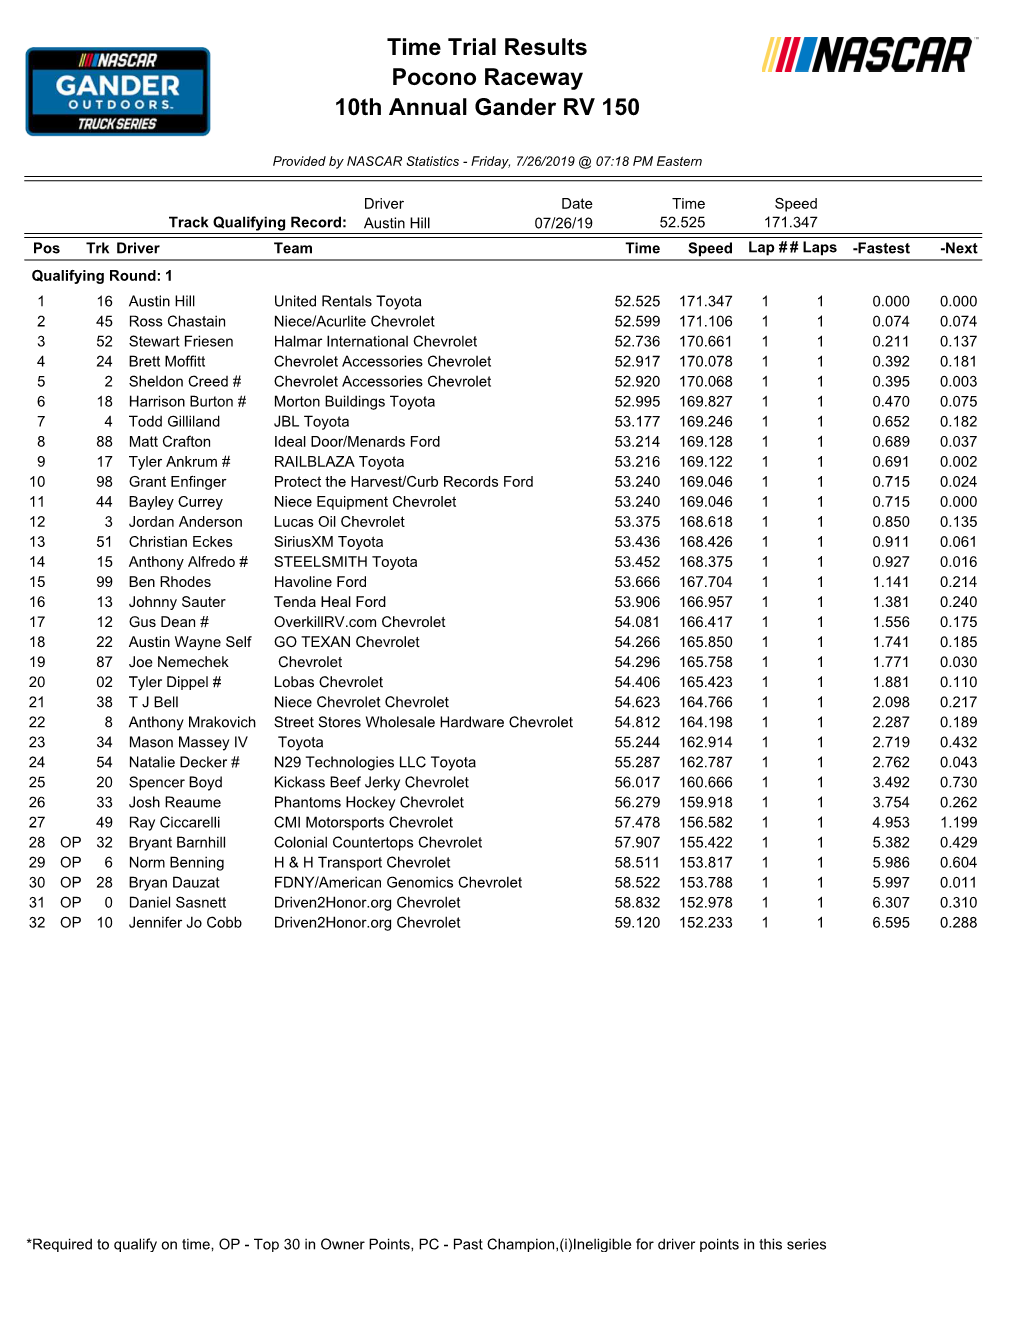 Time Trial Results Pocono Raceway 10Th Annual Gander RV 150